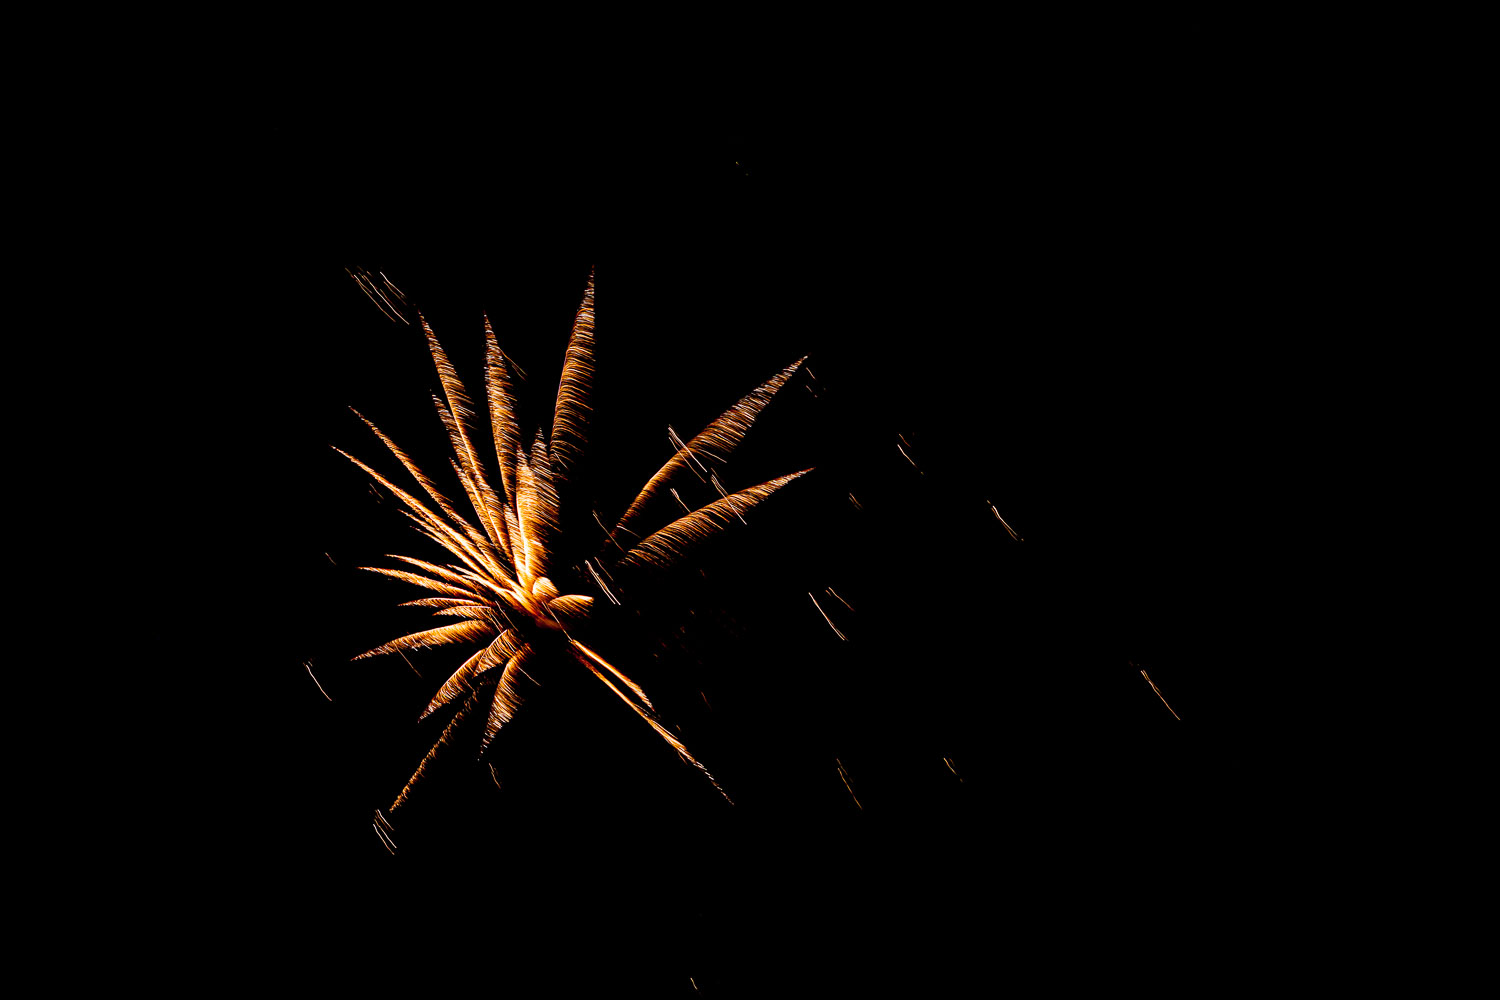 Fireworks_14_57873__MG_8952.jpg